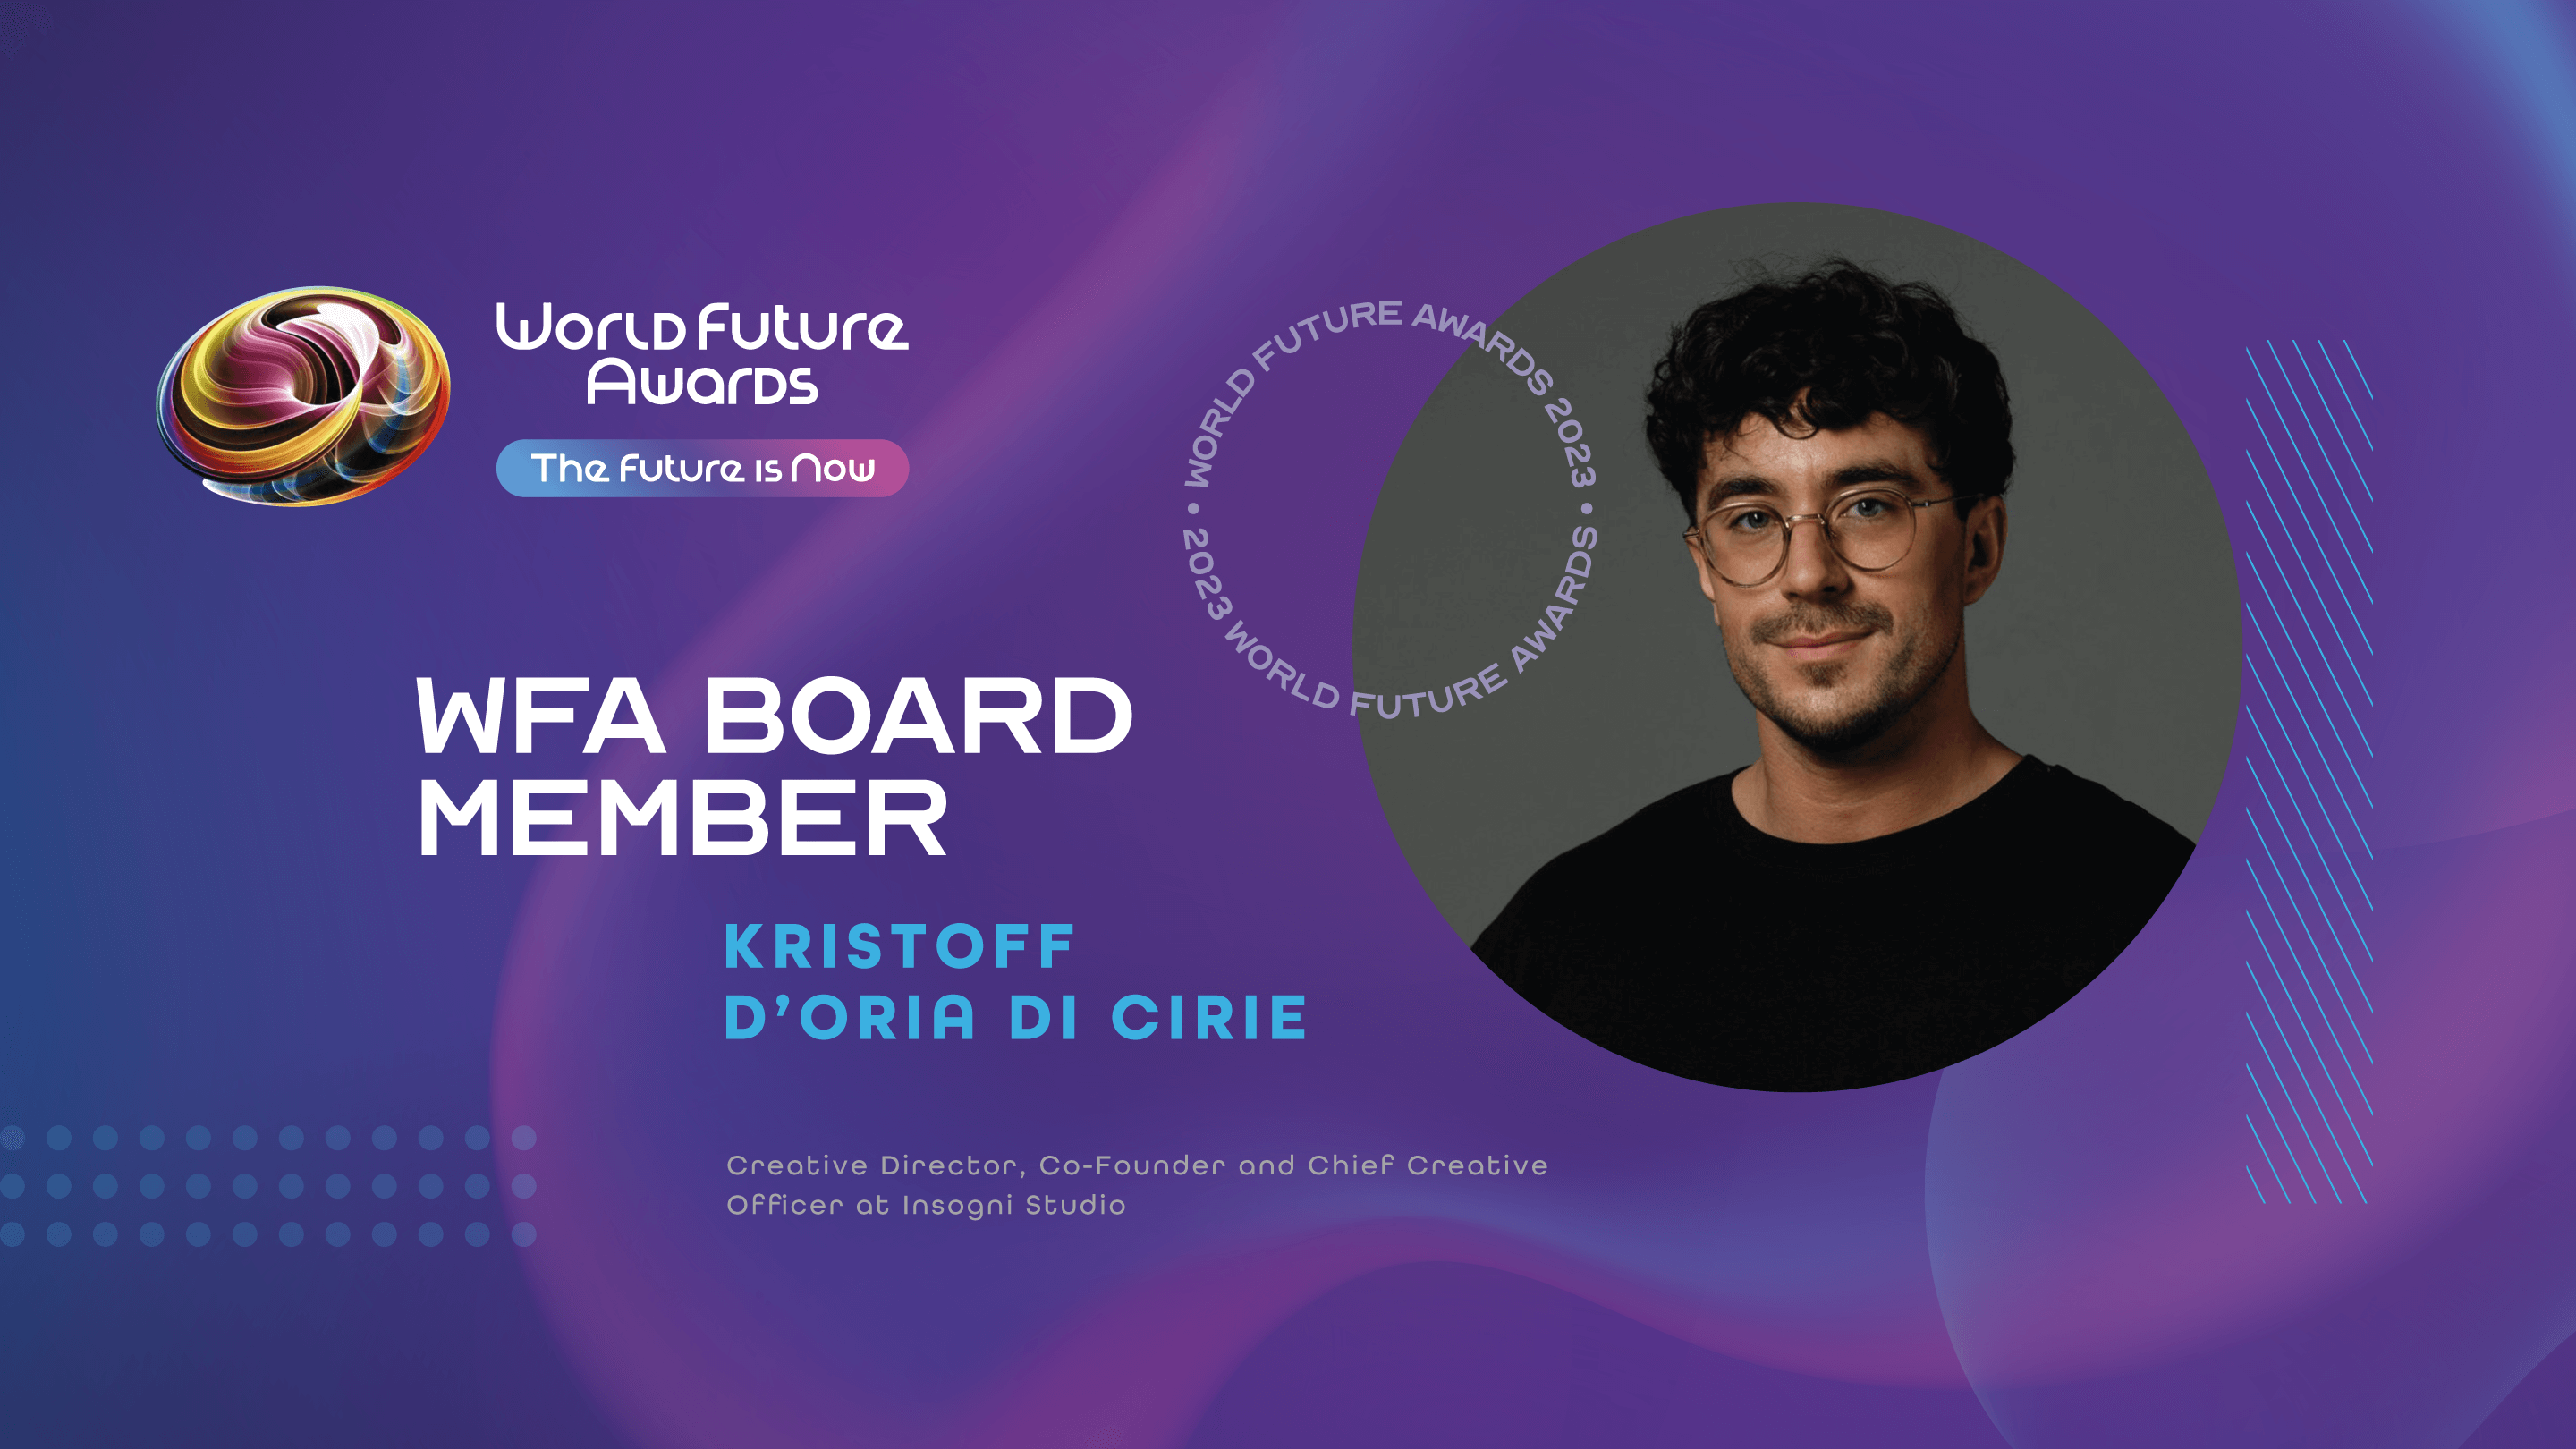 Kristoff D’oria di Cirie, Creative Director, Co-Founder, and Chief Creative Officer at Insogni Studio